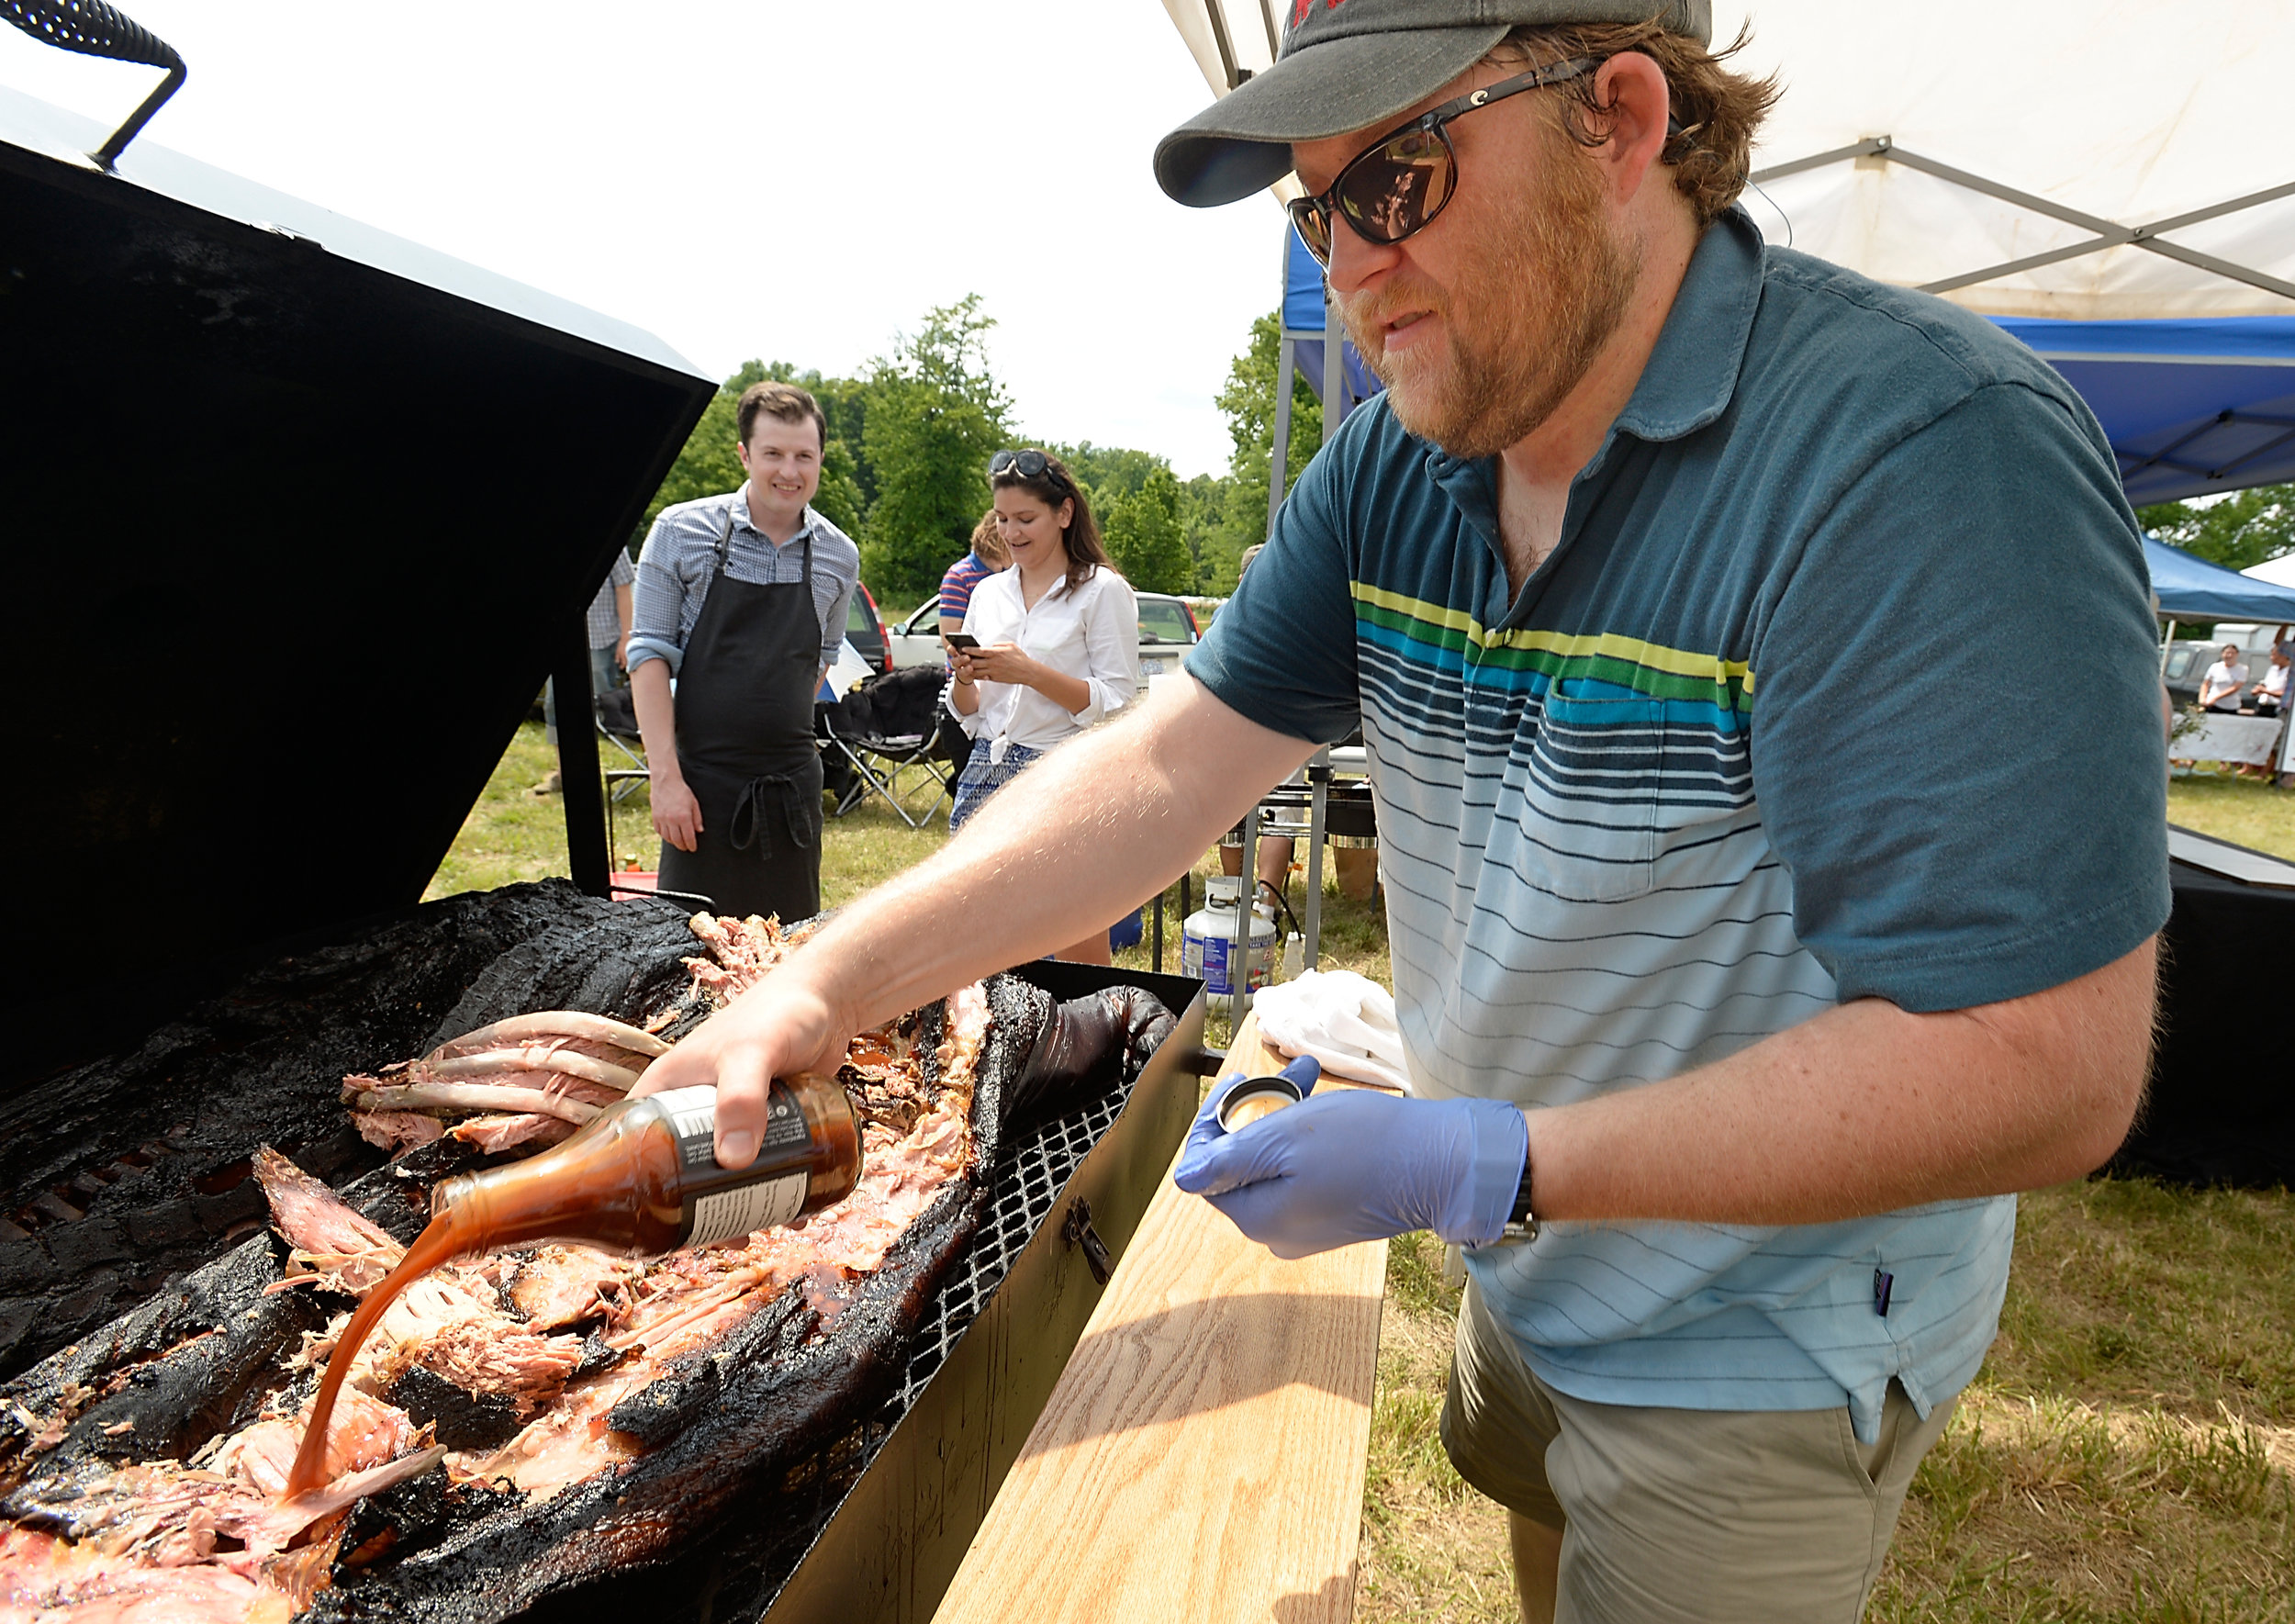 Heart attack led South Carolina man to create no-salt barbecue